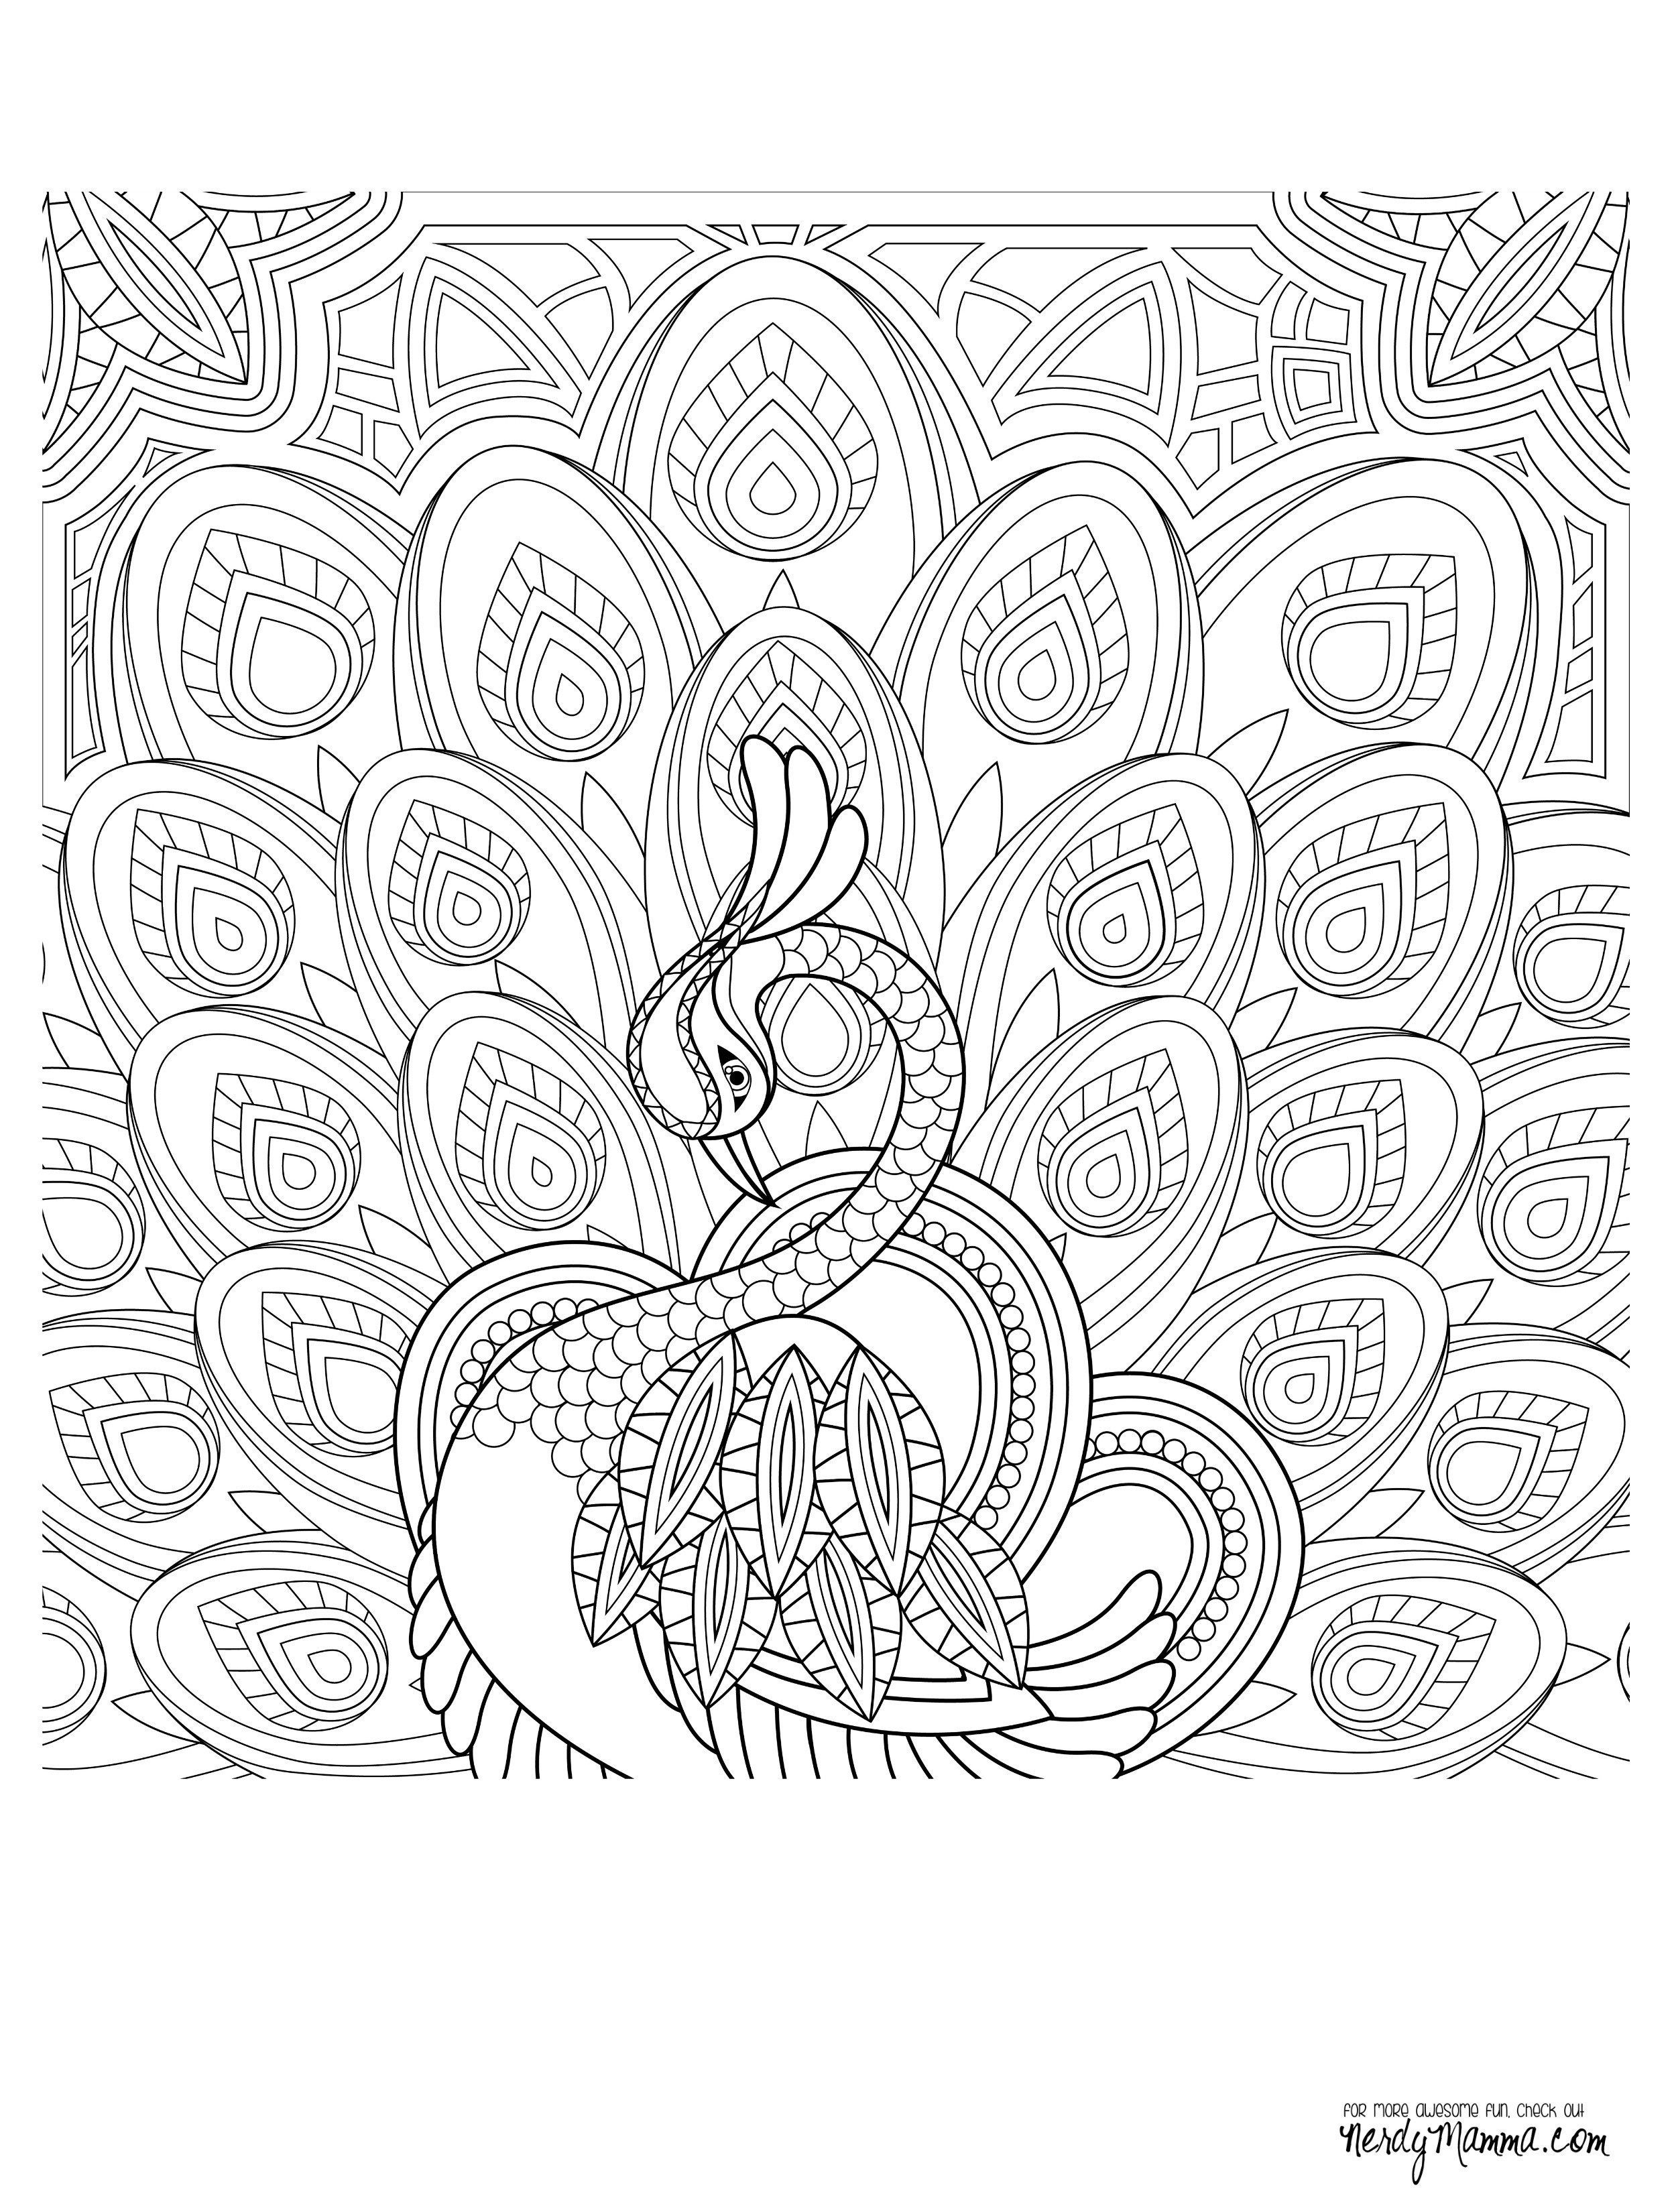 Peacock Feather Coloring pages colouring adult detailed advanced printable Kleuren voor volwassenen coloriage pour adulte